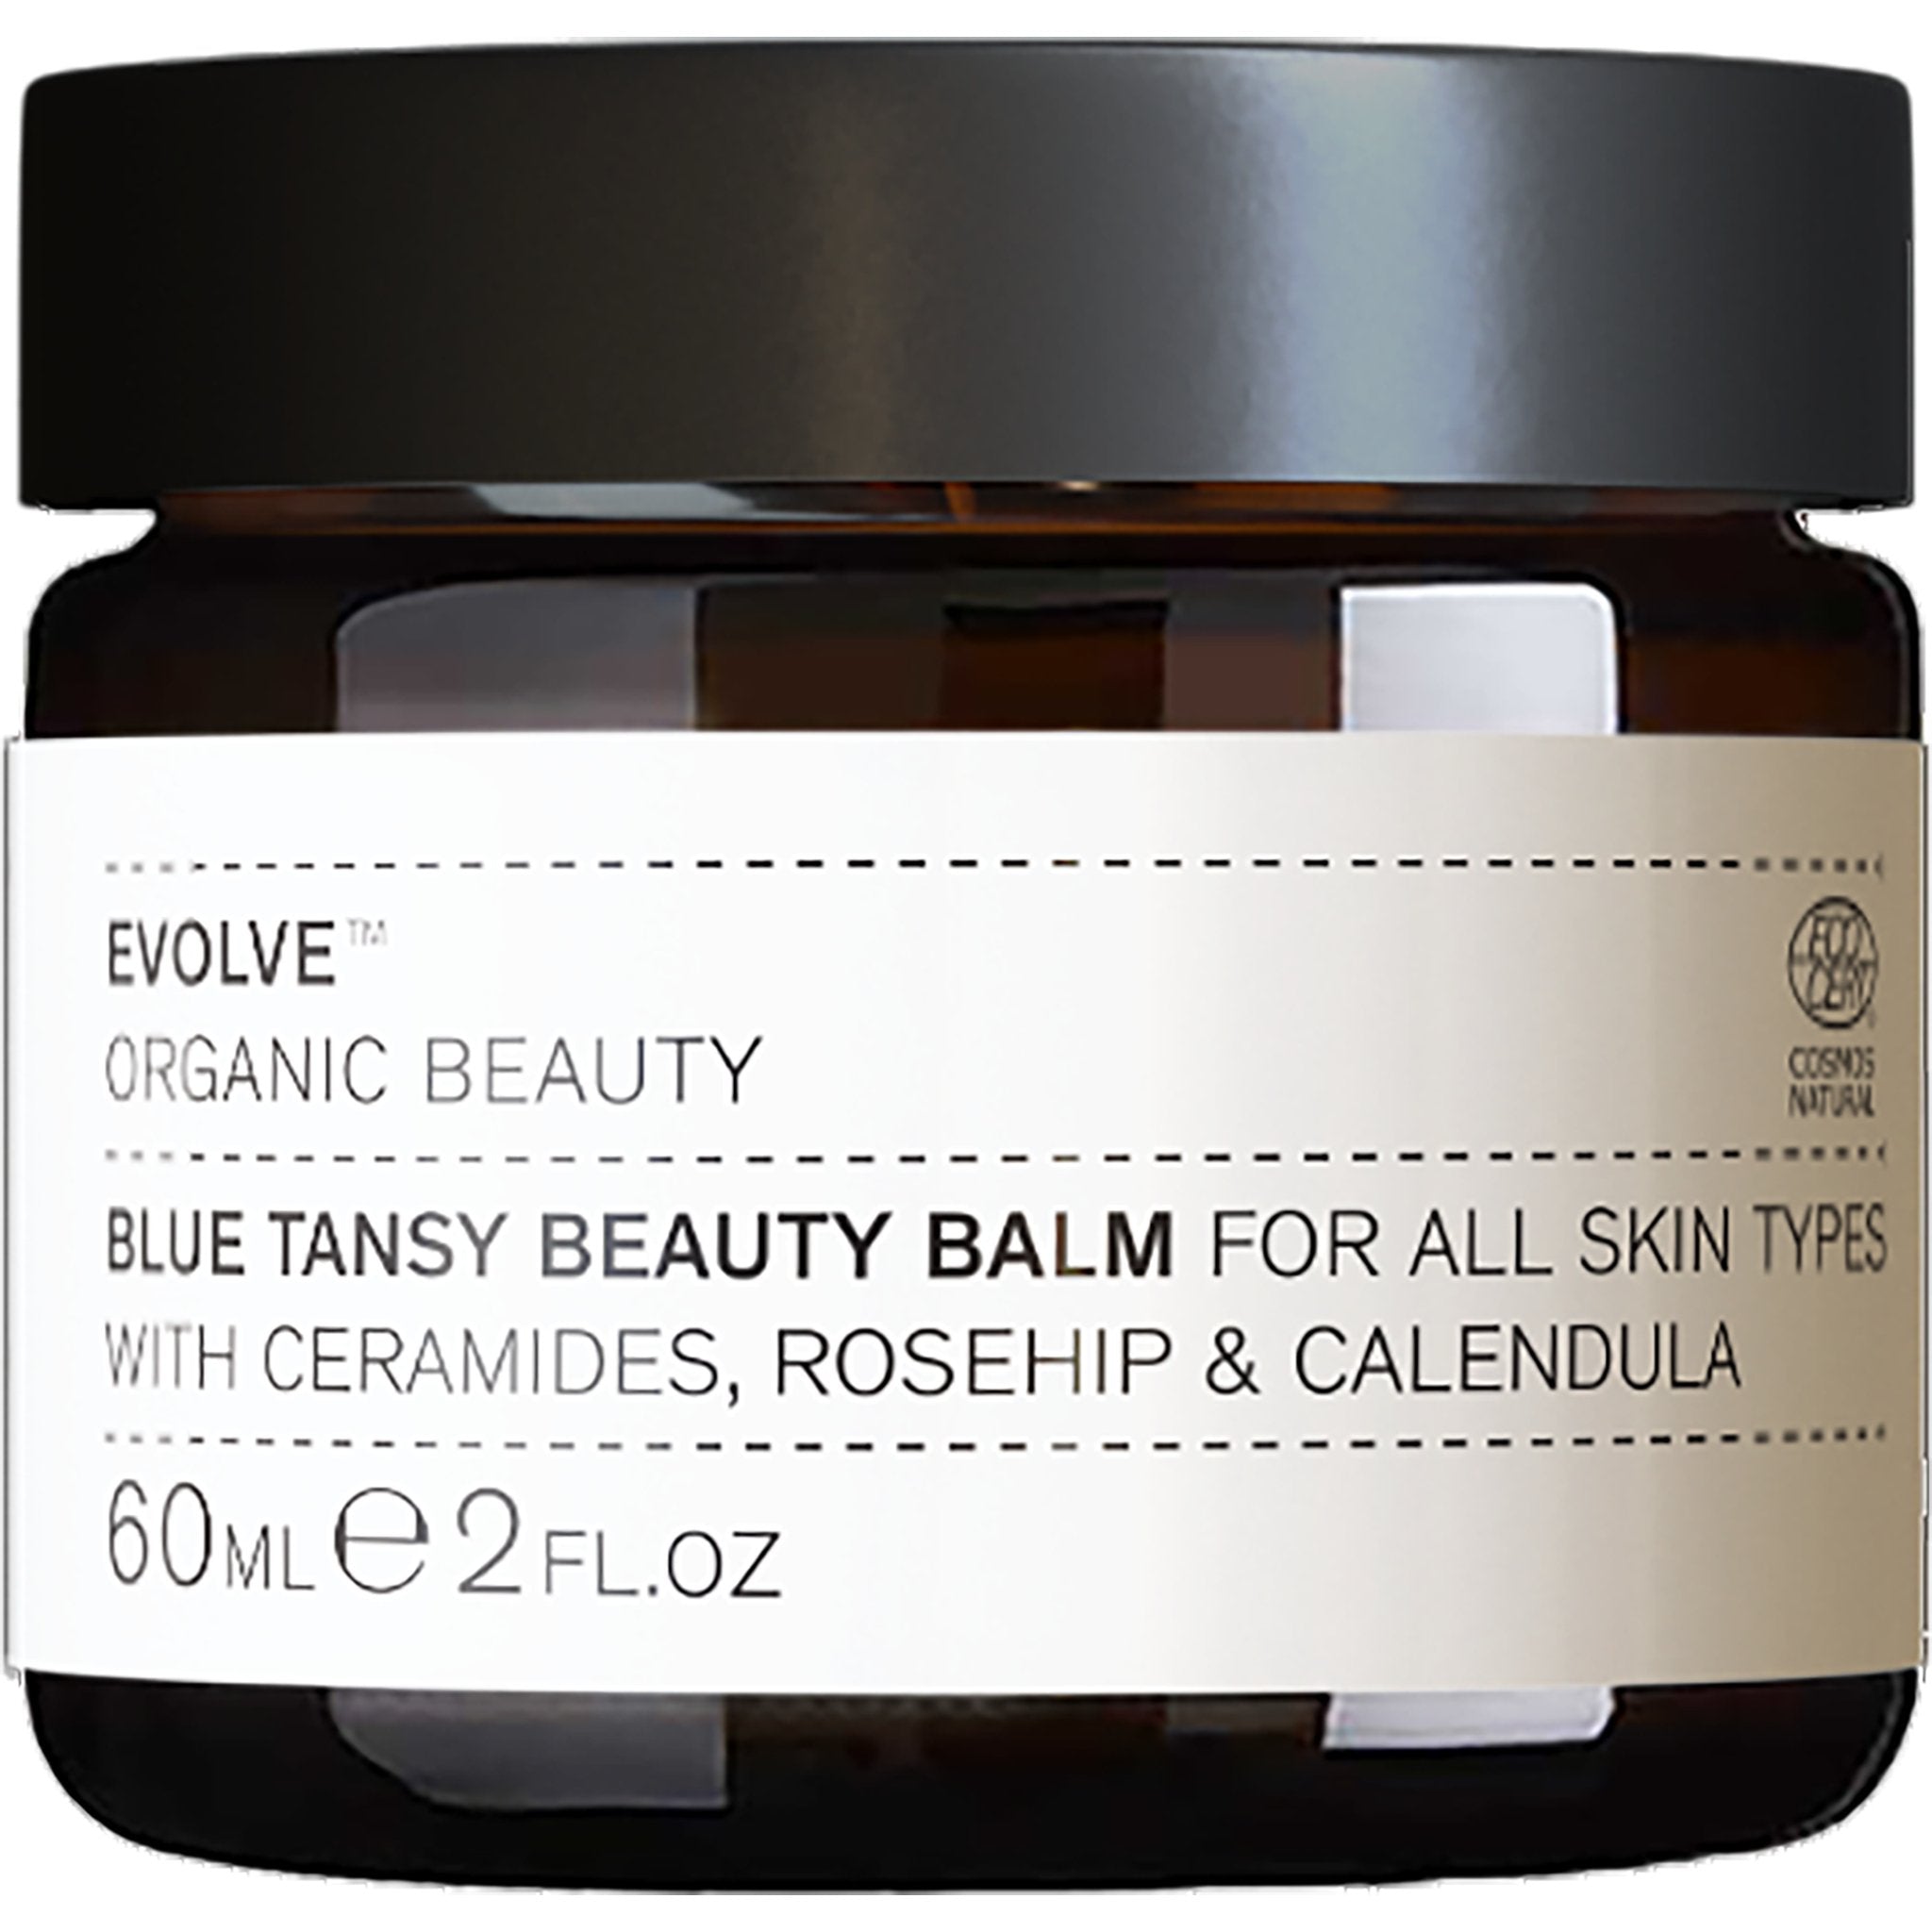 Blue Tansy Beauty Balm - mypure.co.uk